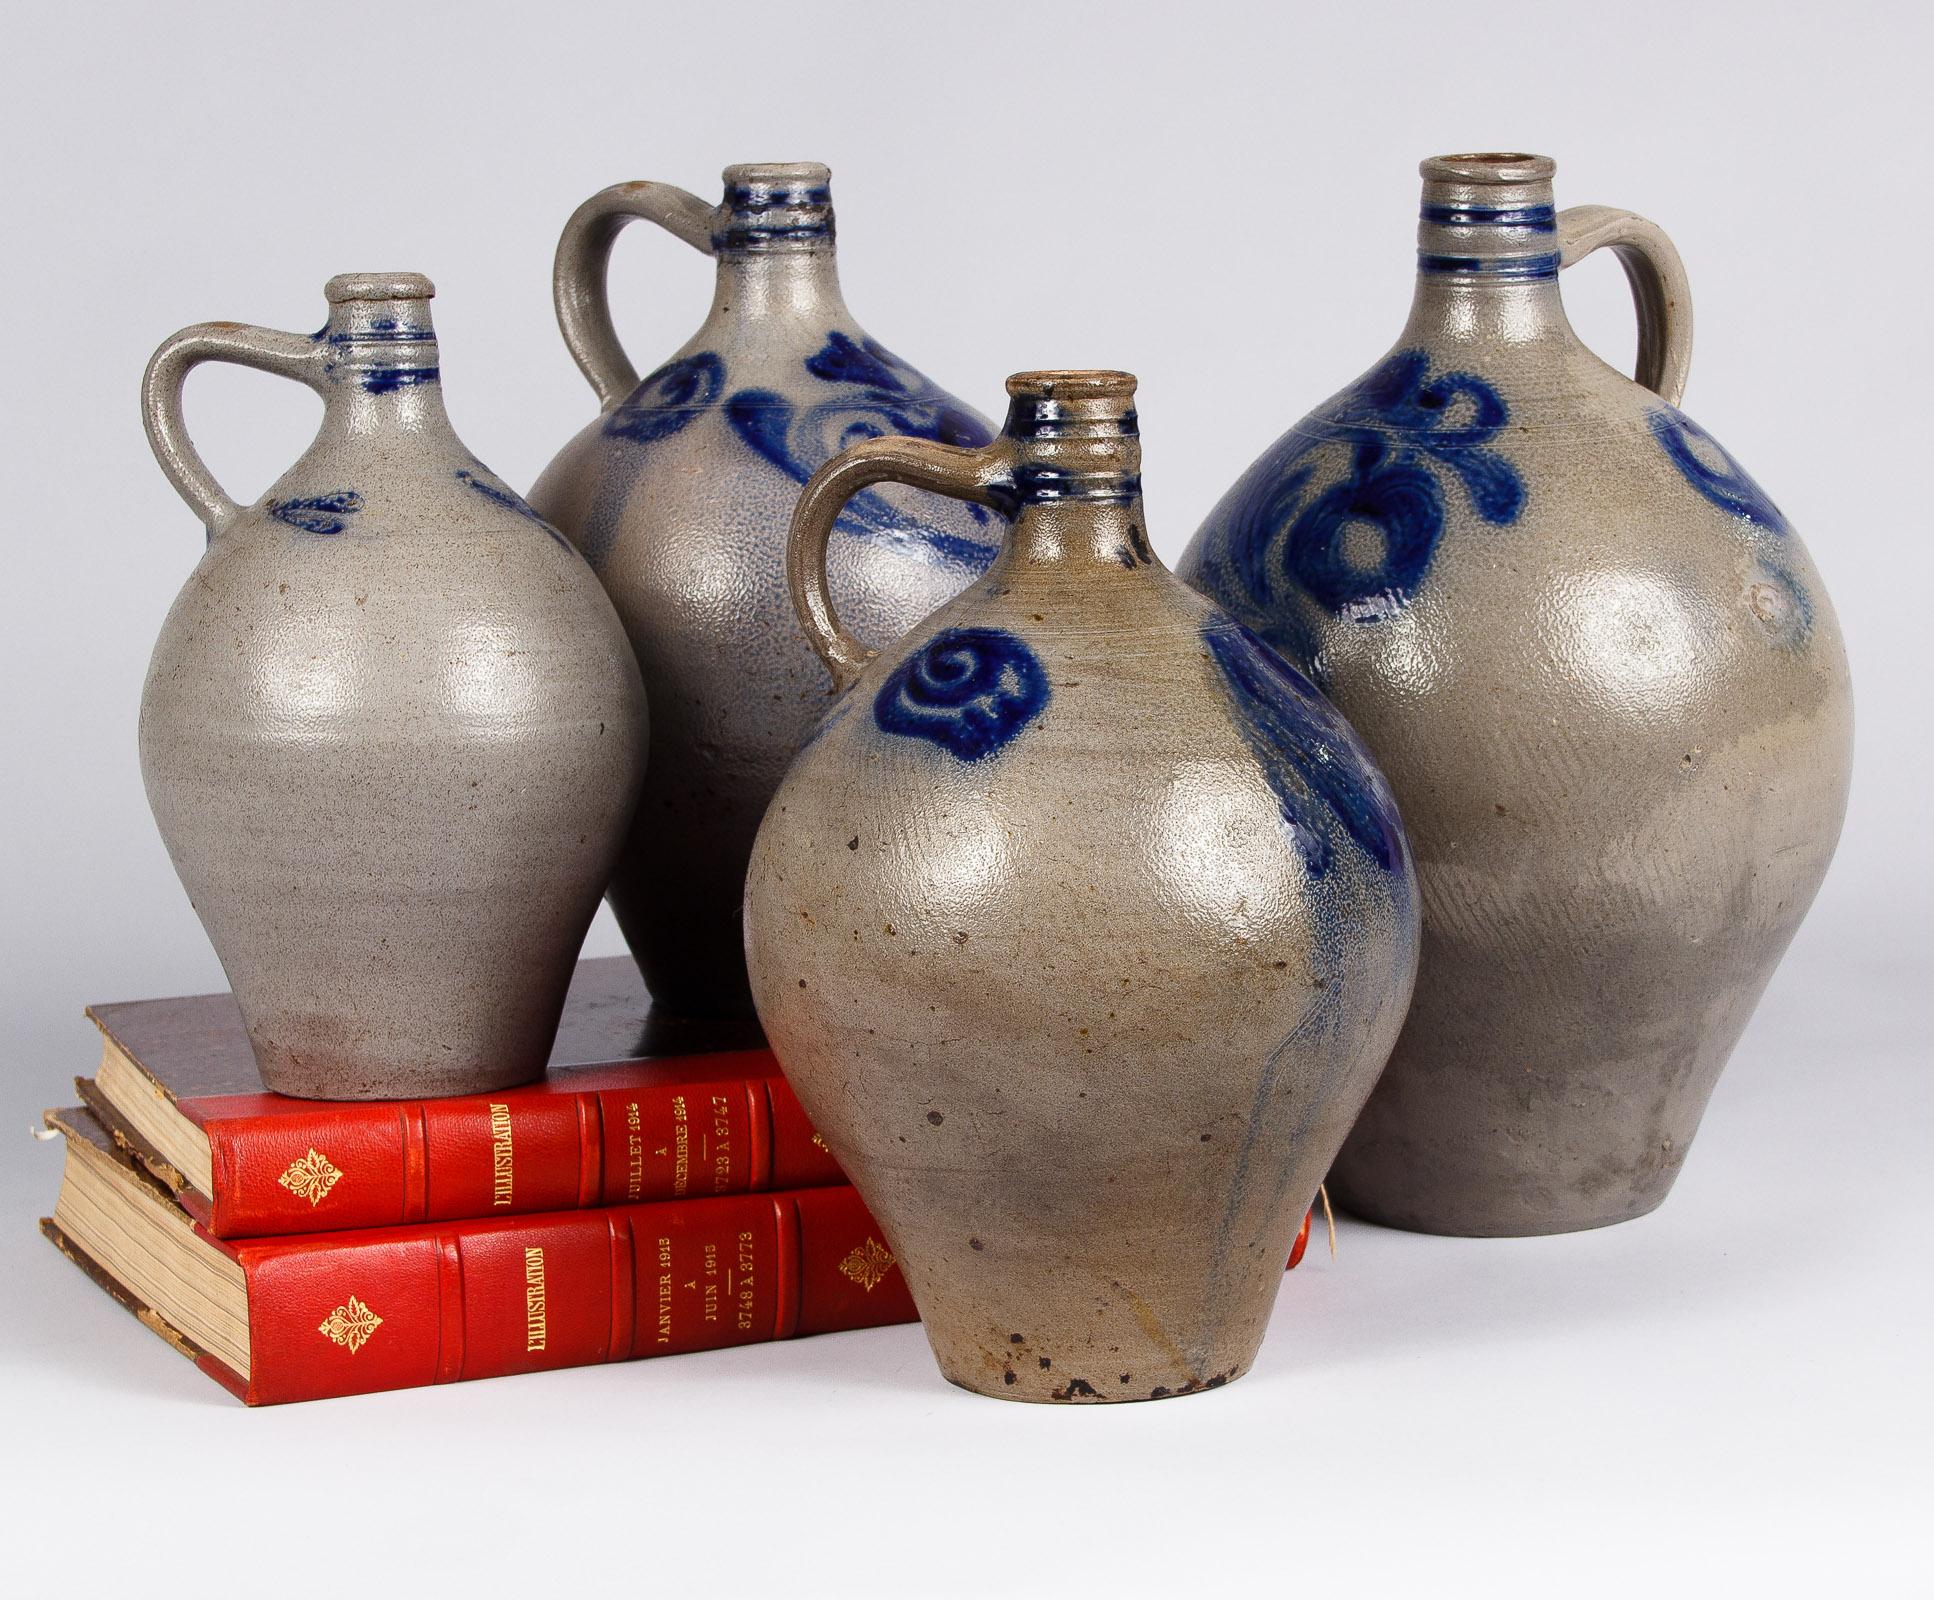 20th Century Earthenware Jar from Alsace Region, France, 1920s